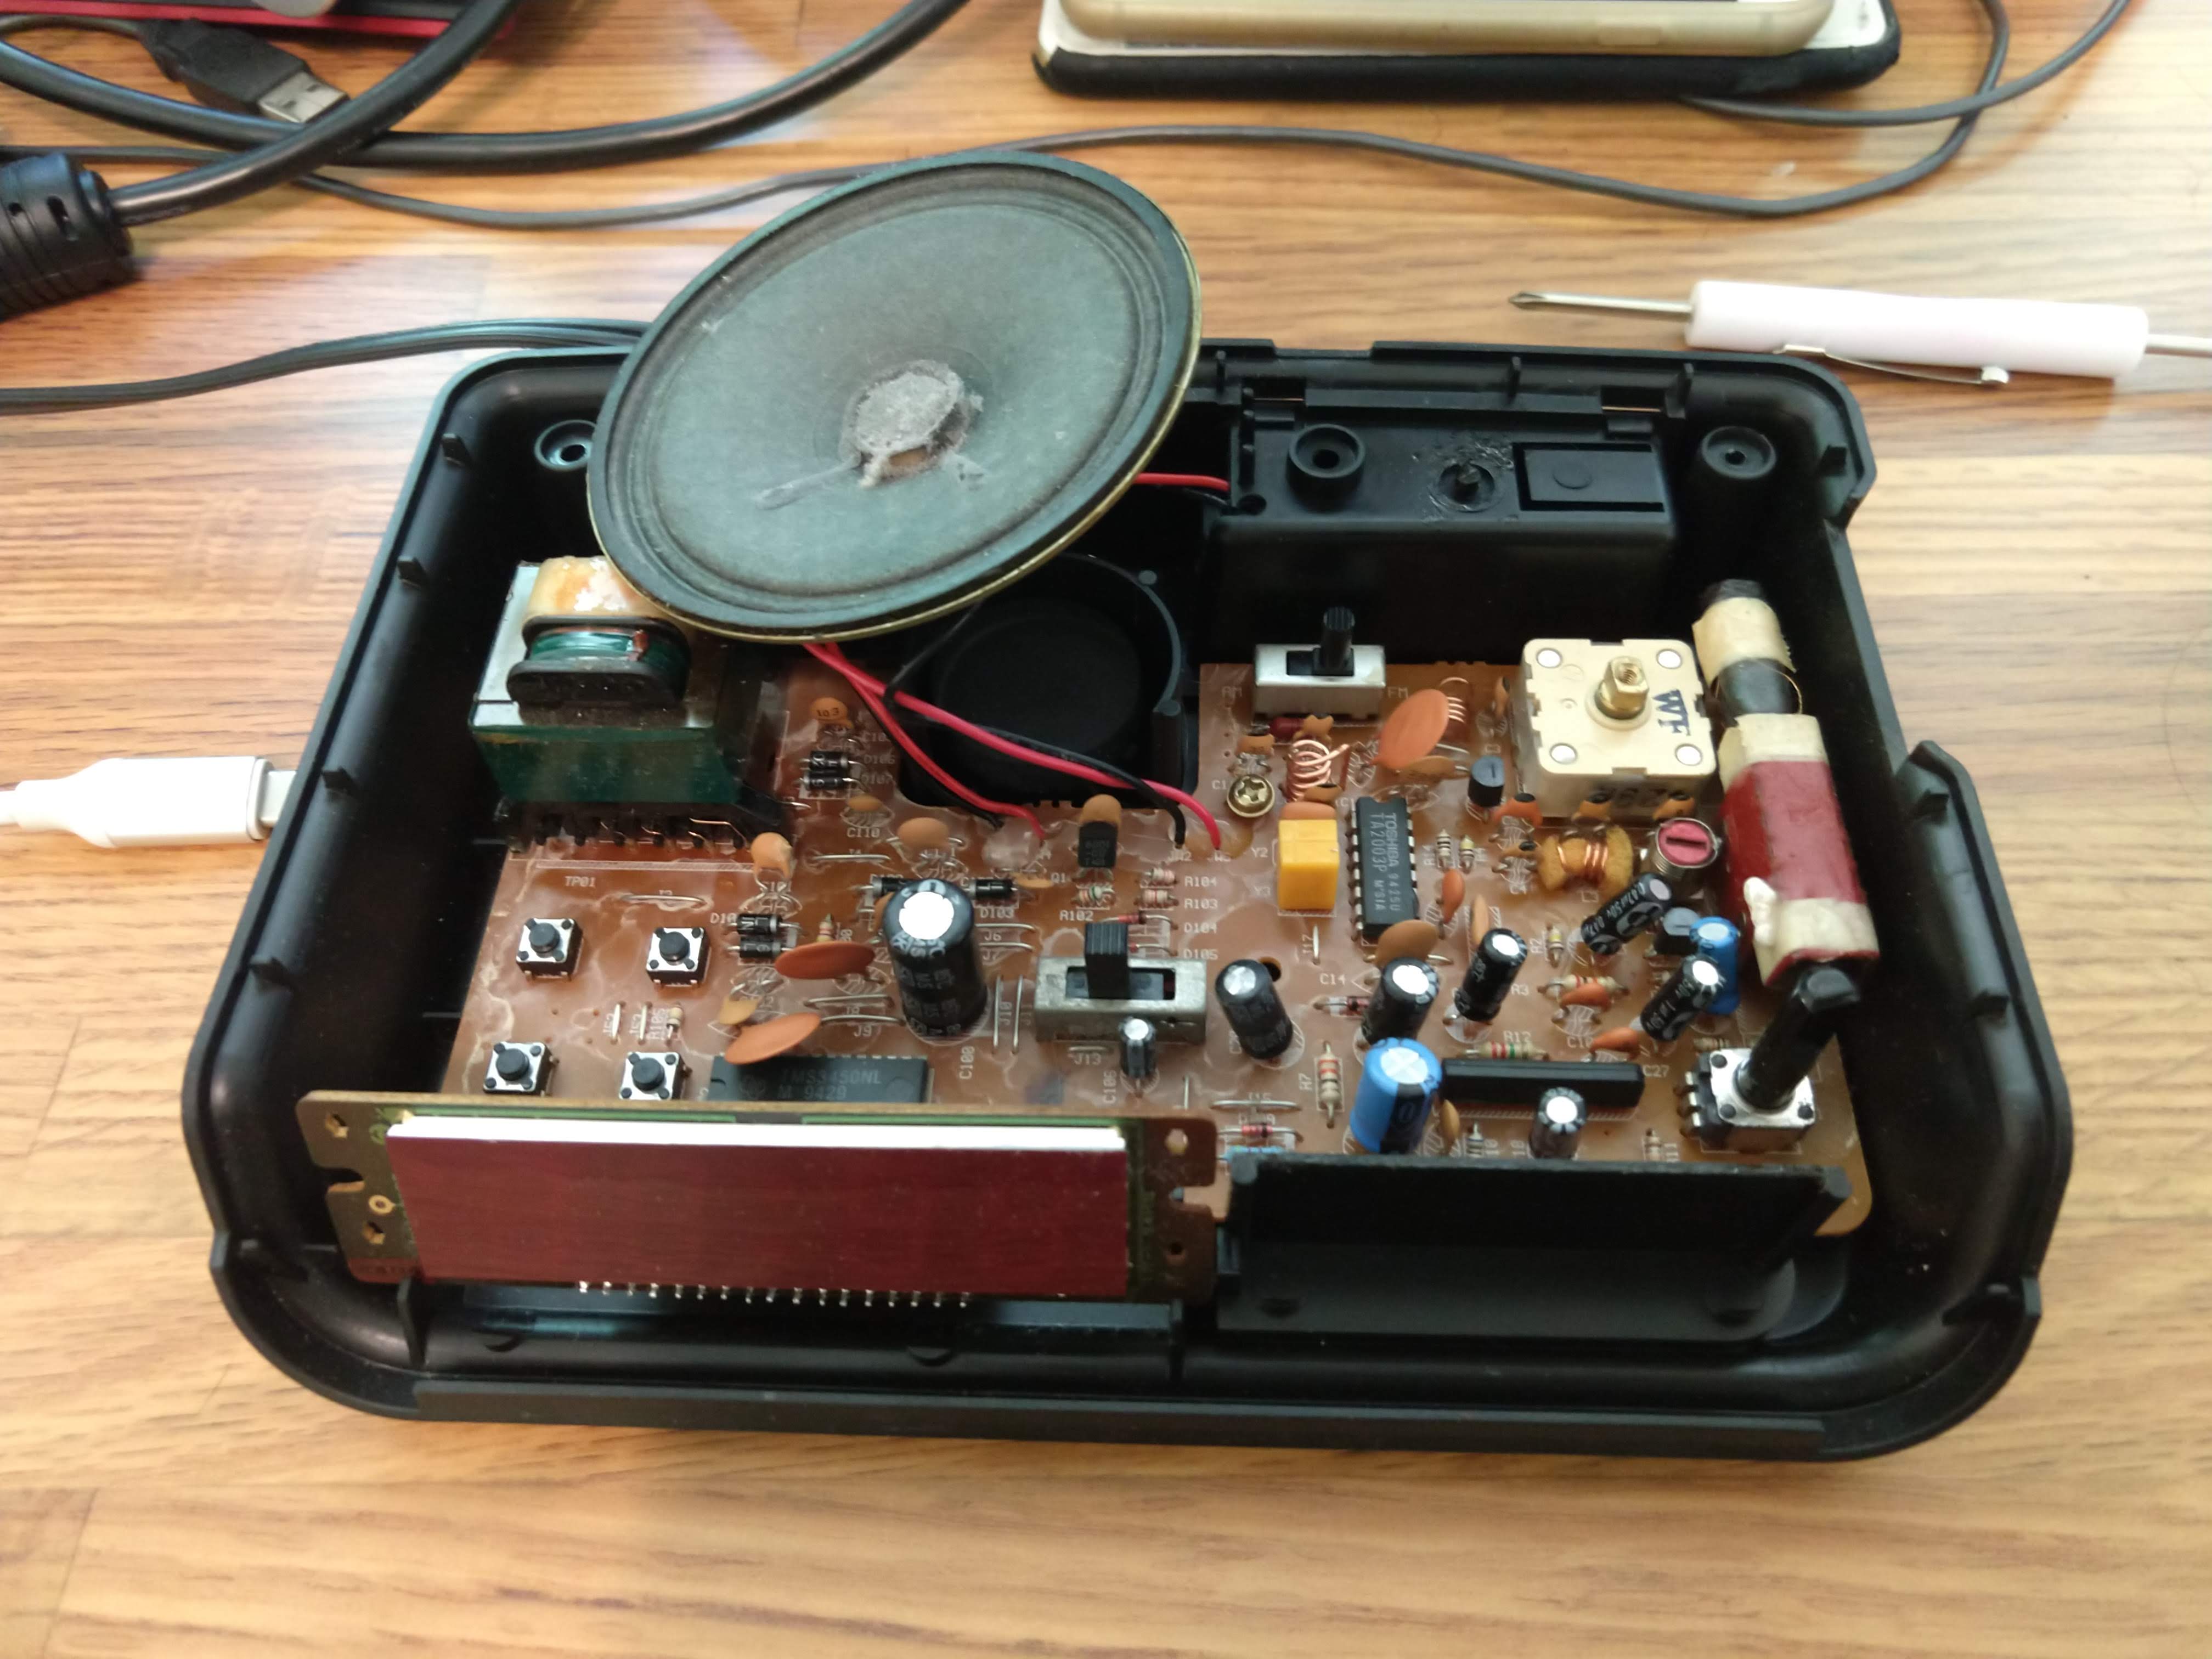 Photo of the clock radio internals